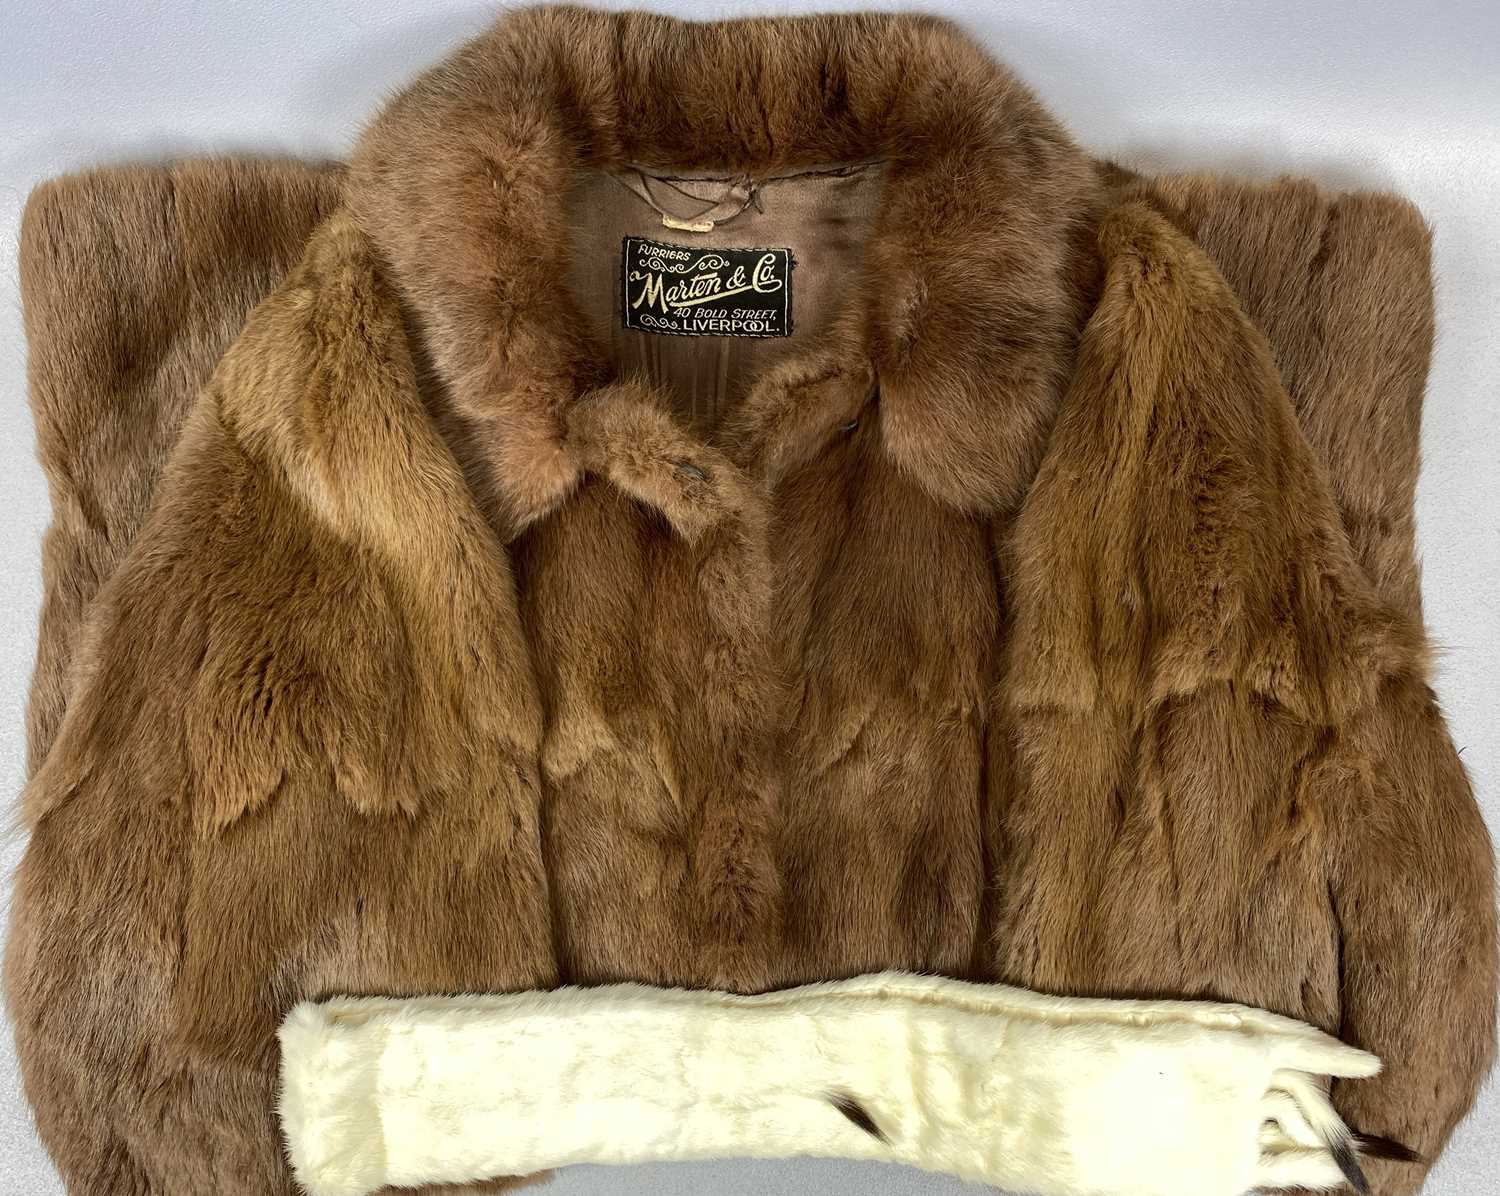 VINTAGE FUR COAT, LABEL FOR MARTIN & CO. FURRIERS LIVERPOOL, vintage Ermine fur stole and a black - Image 2 of 2